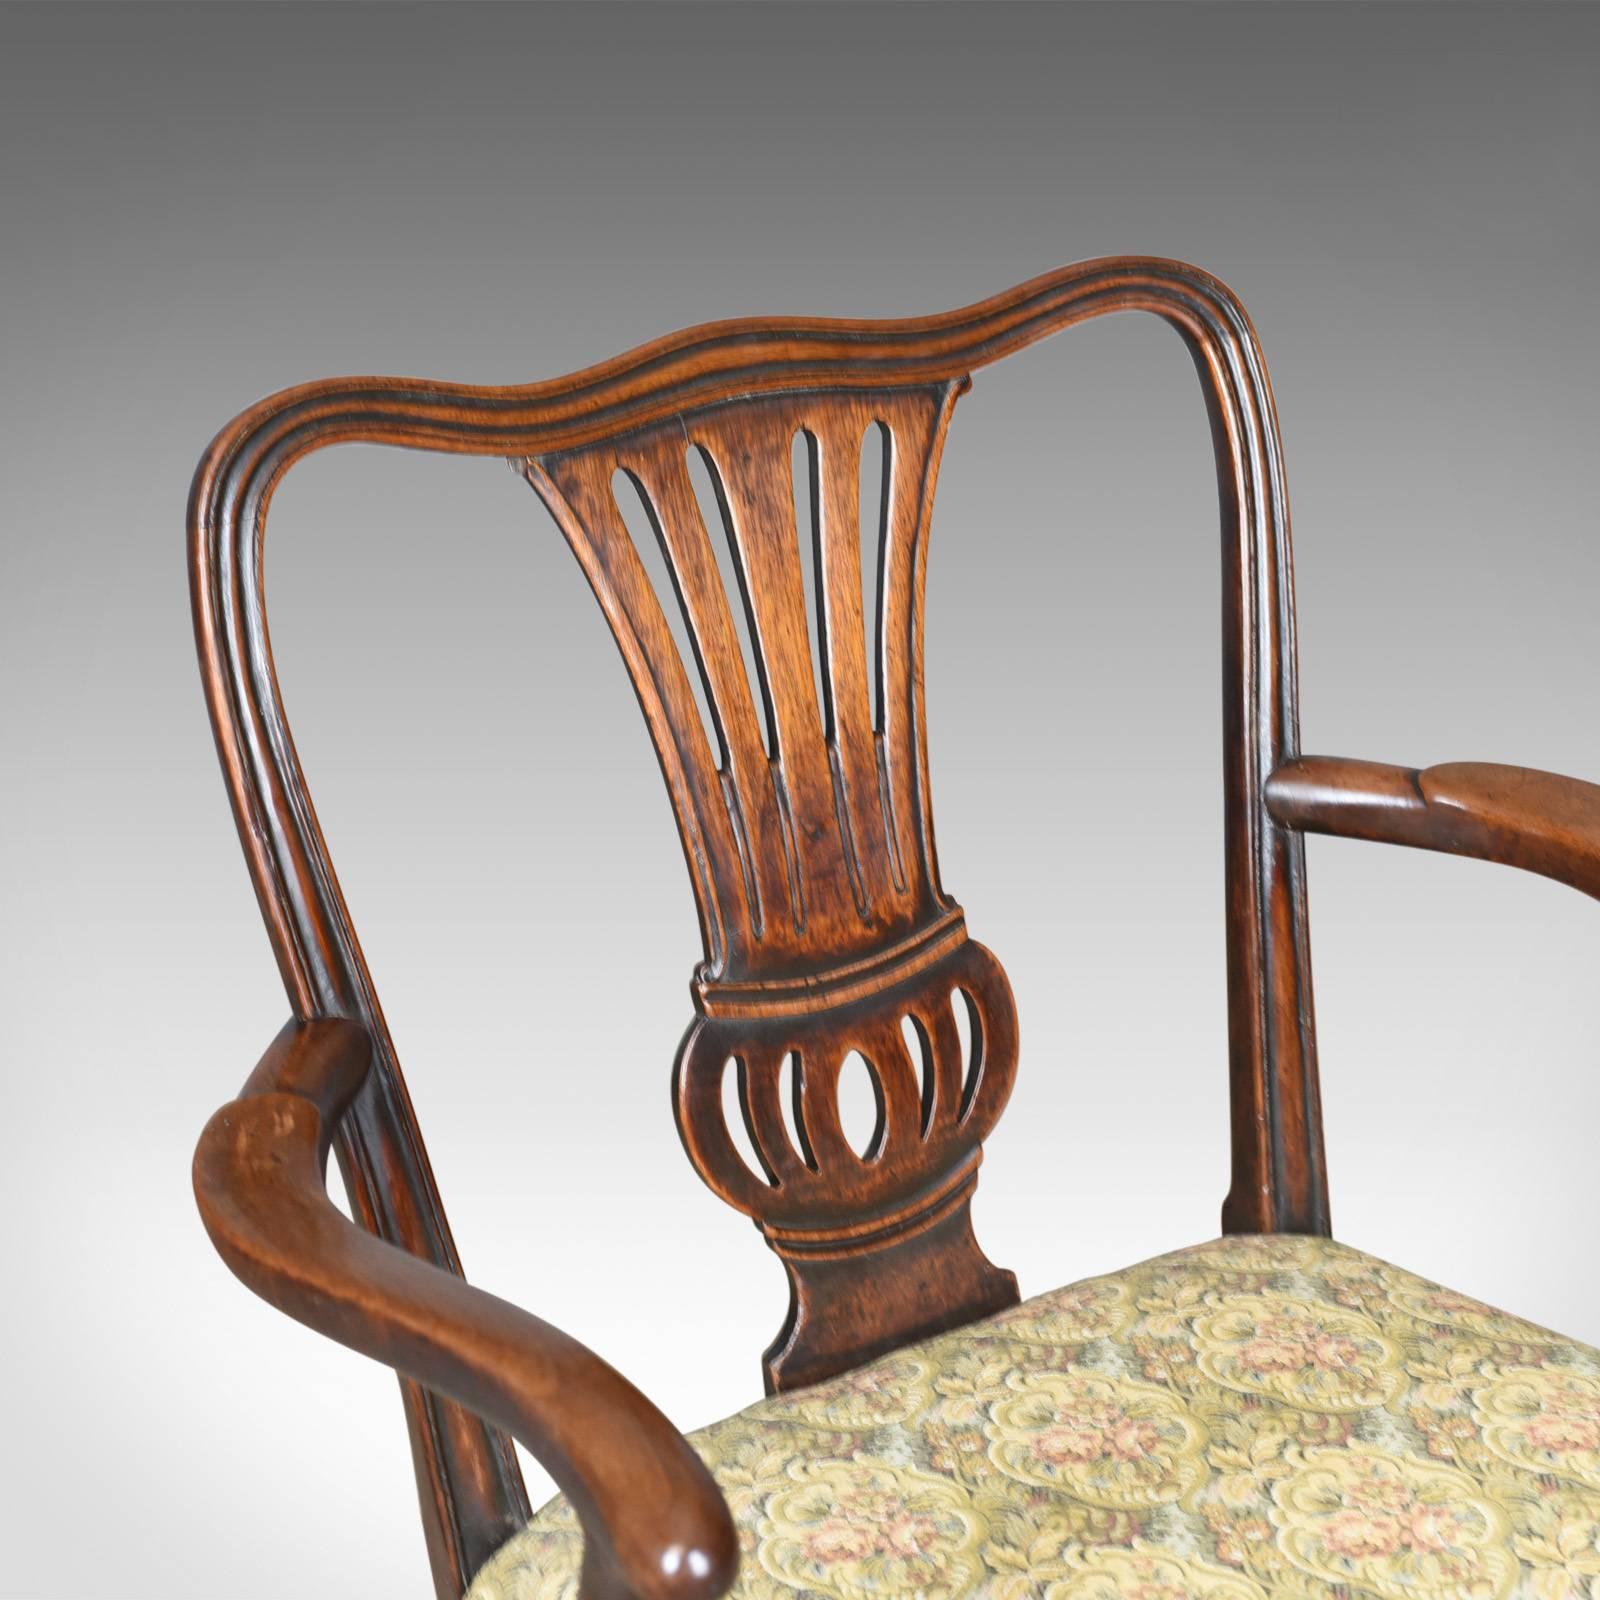 Upholstery Antique Elbow Chair, English, Georgian, Mahogany, Open Armchair, circa 1780